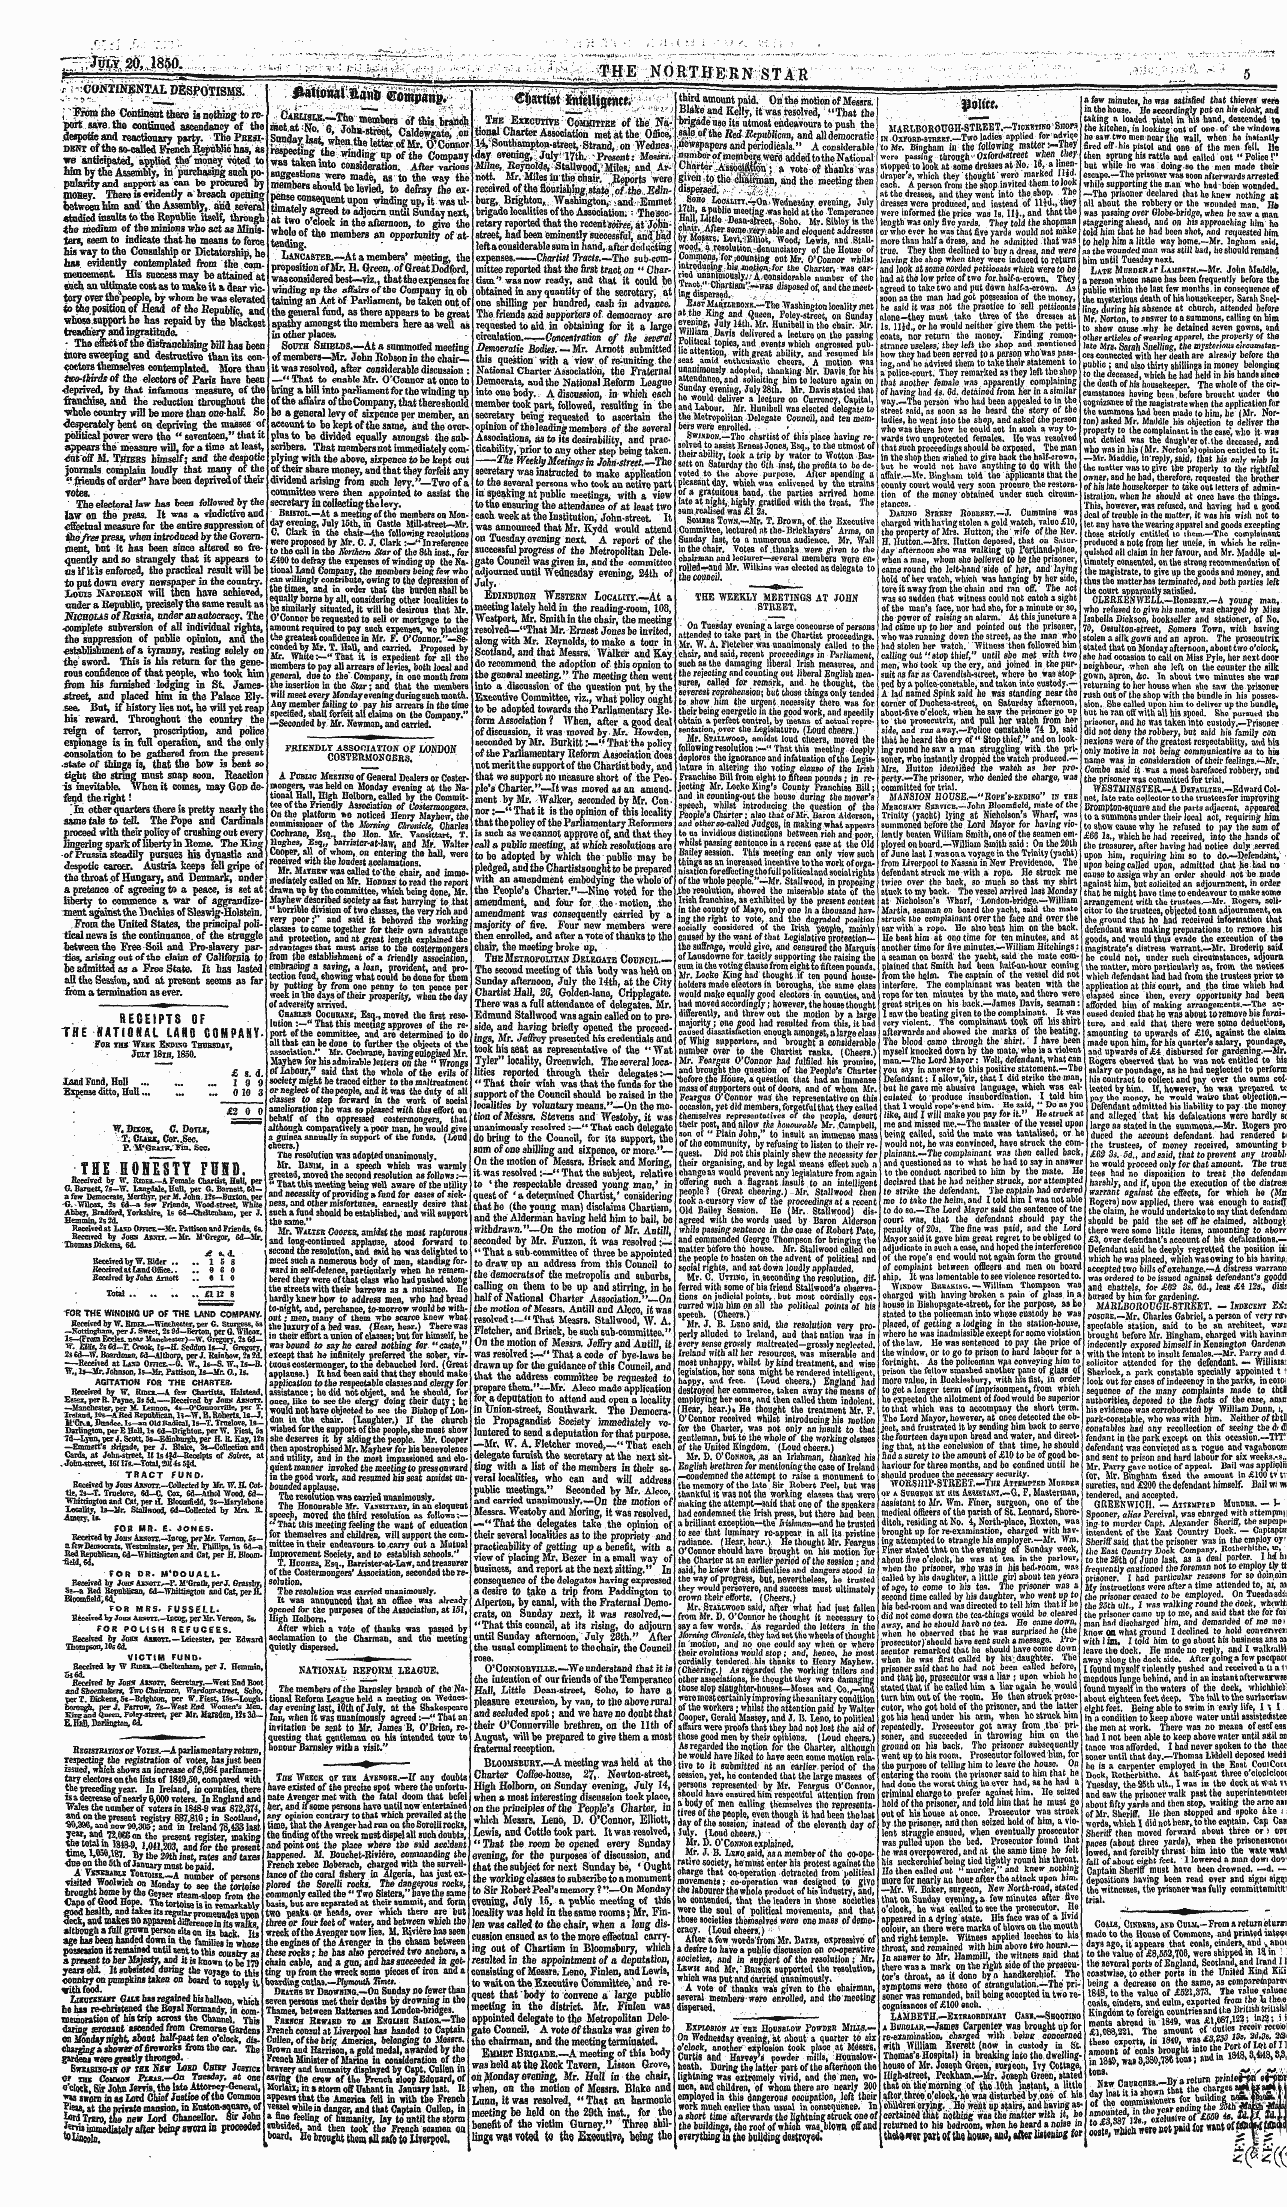 Northern Star (1837-1852): jS F Y, 3rd edition - Regisieatiox Of Votes.—A Parliamentary R...